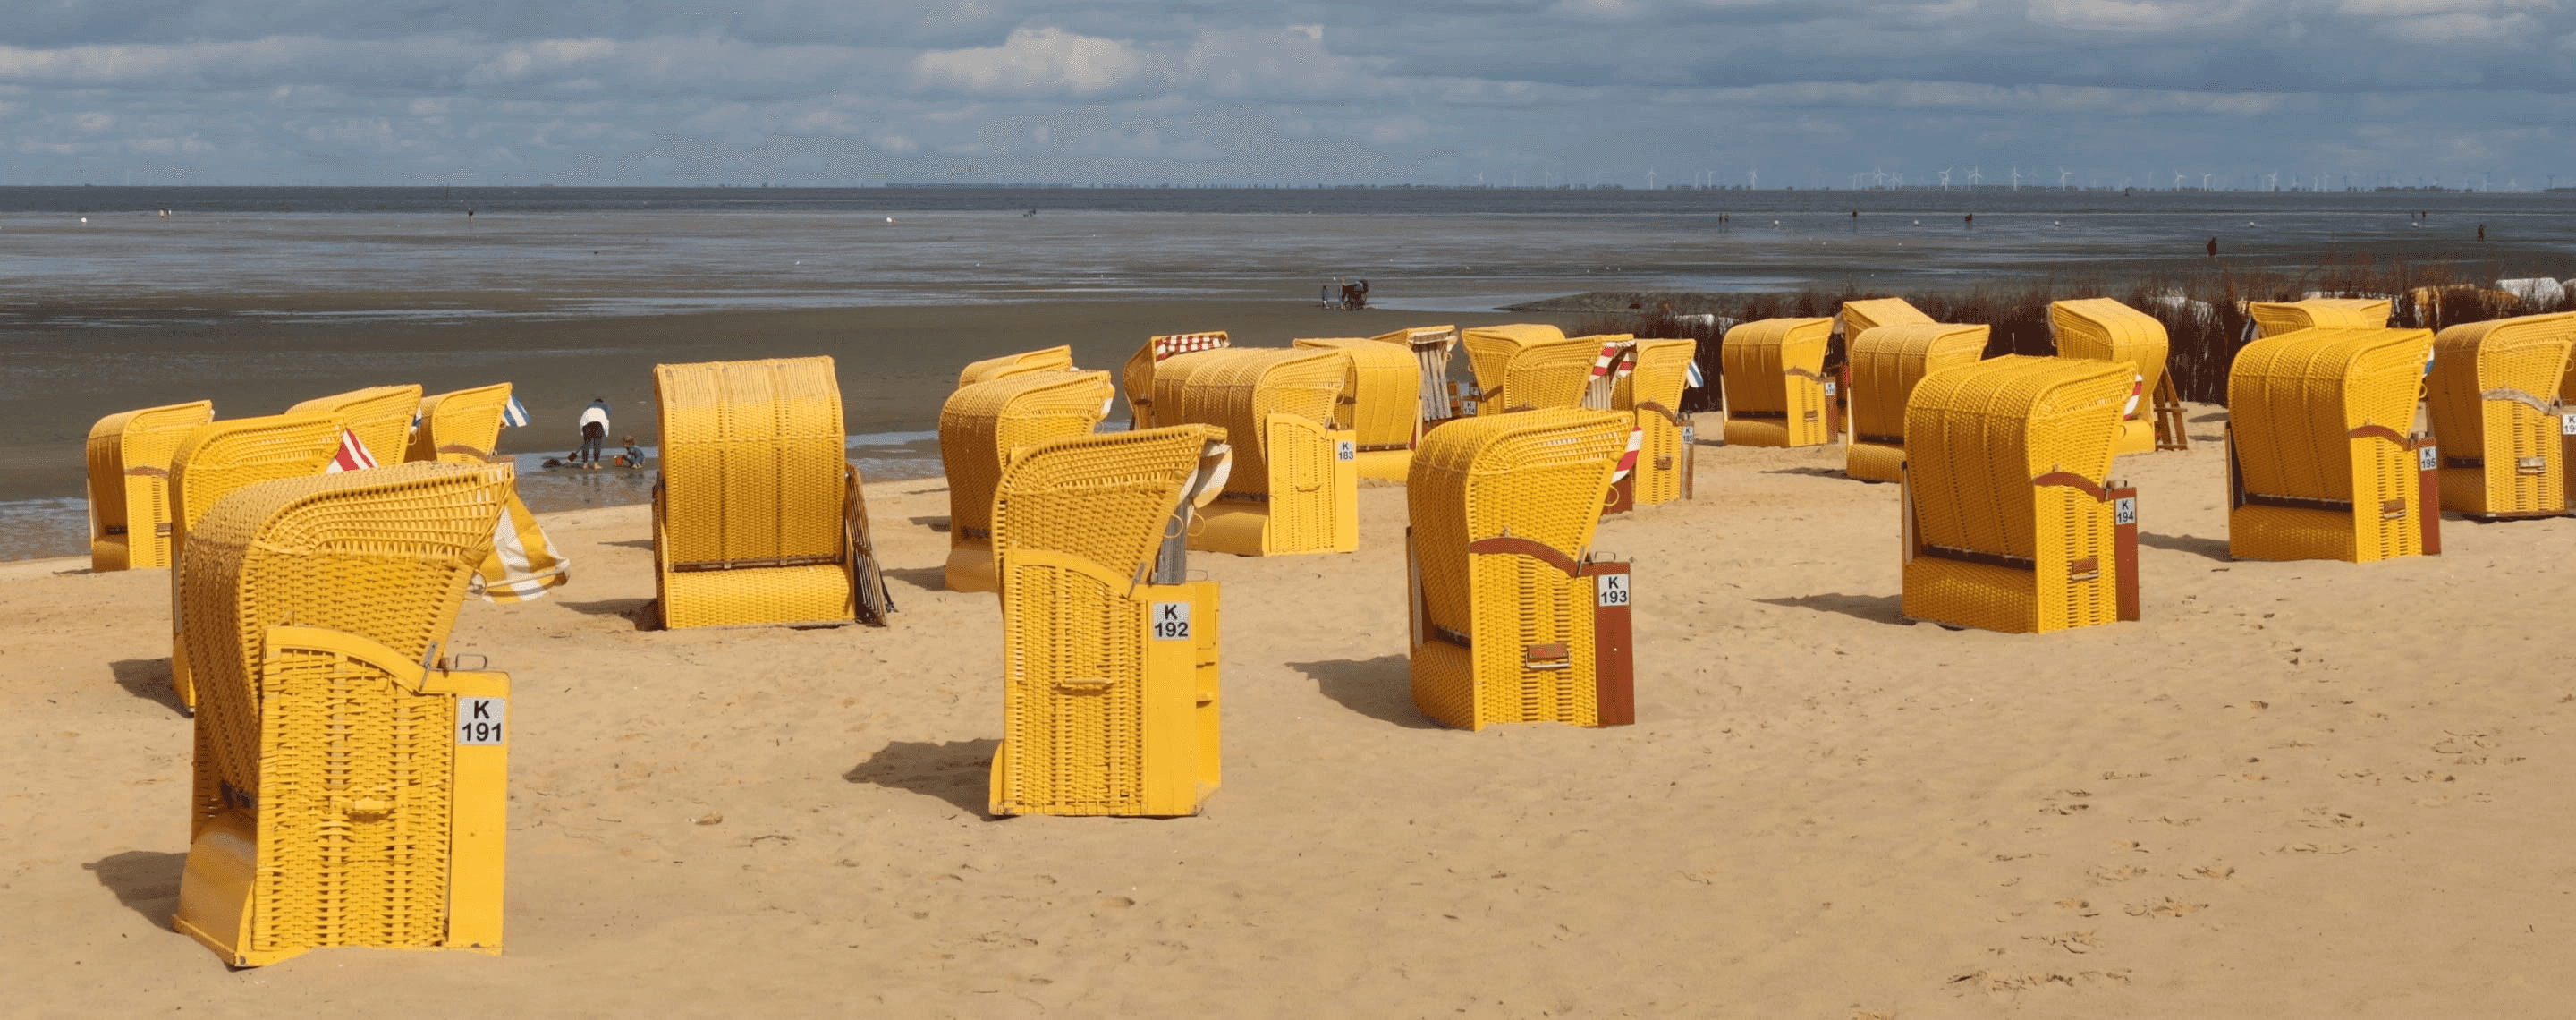 Strandkörbe an der Nordsee bei Cuxhaven